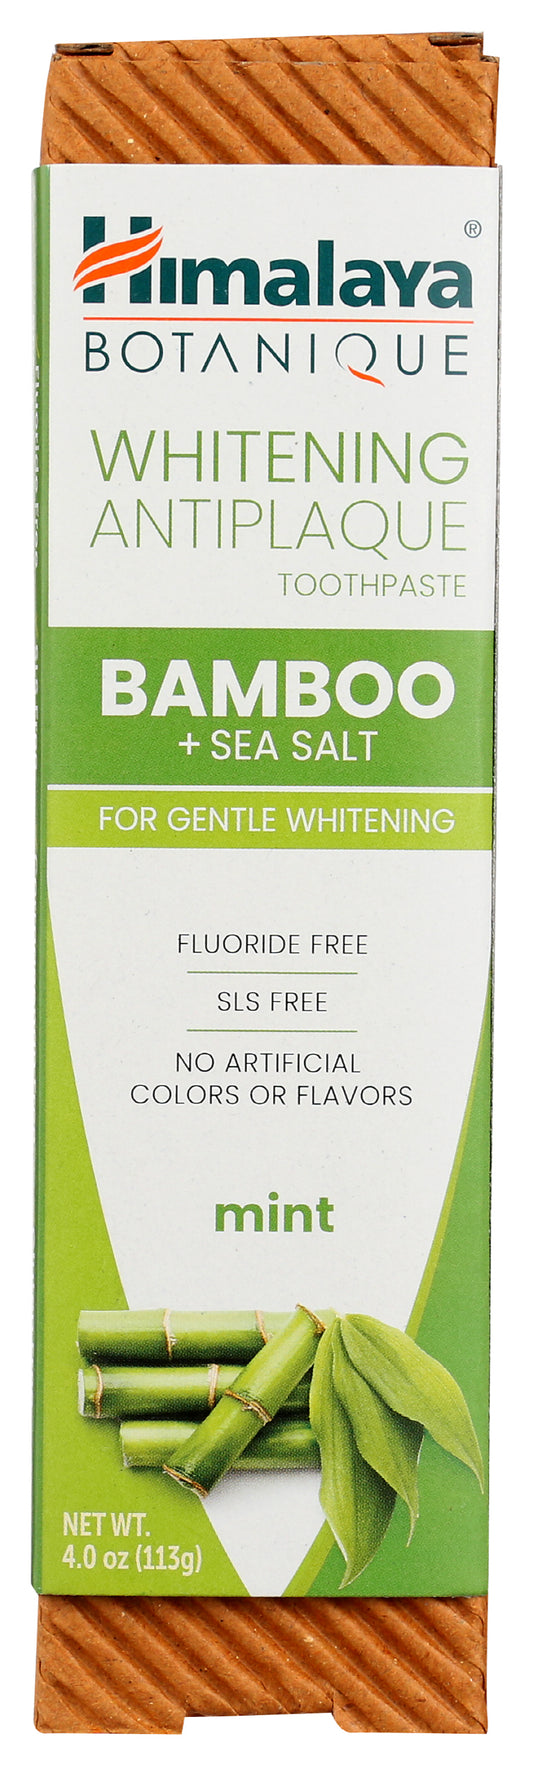 Himalaya Whitening Toothpaste Bamboo + Sea Salt 4.0 oz